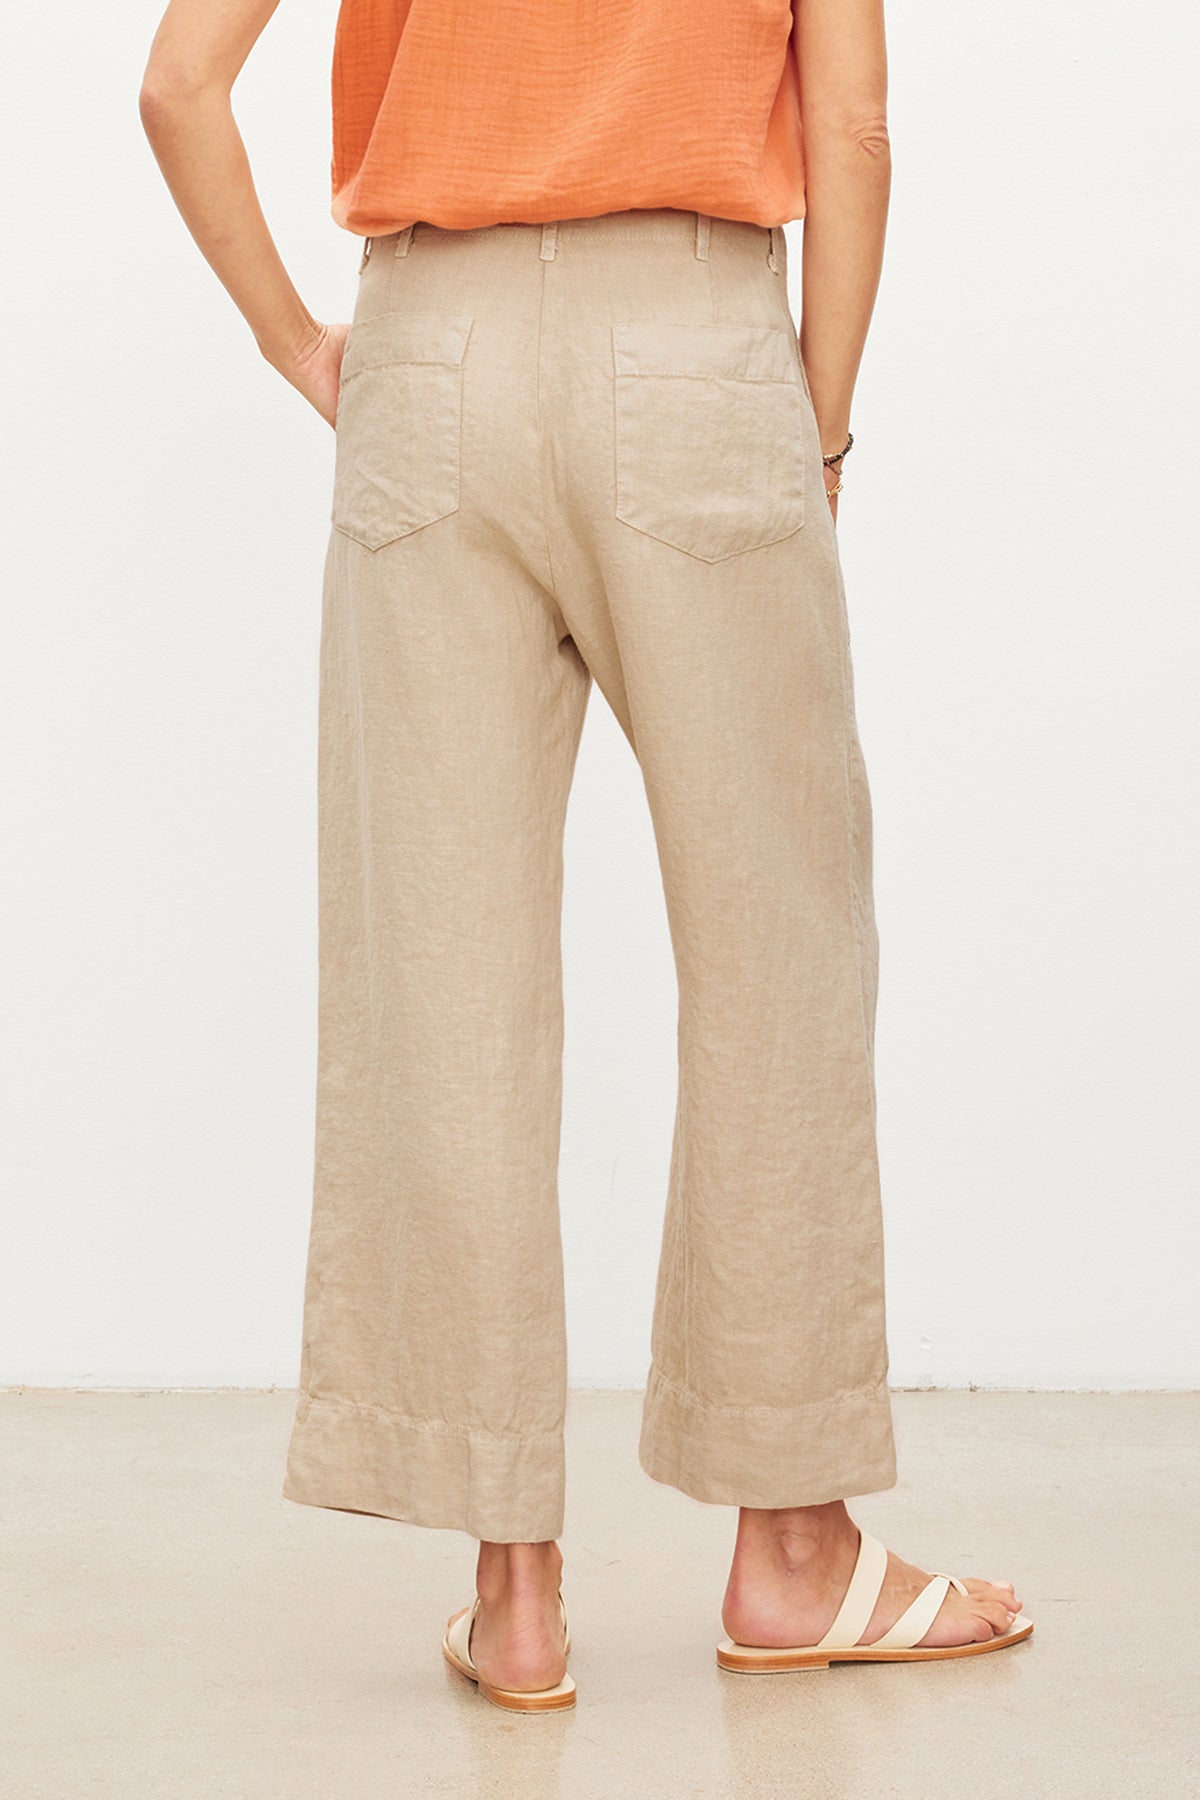 Bulk-buy Summer New Style Linen Comfortable Women′s Pants (18406) price  comparison